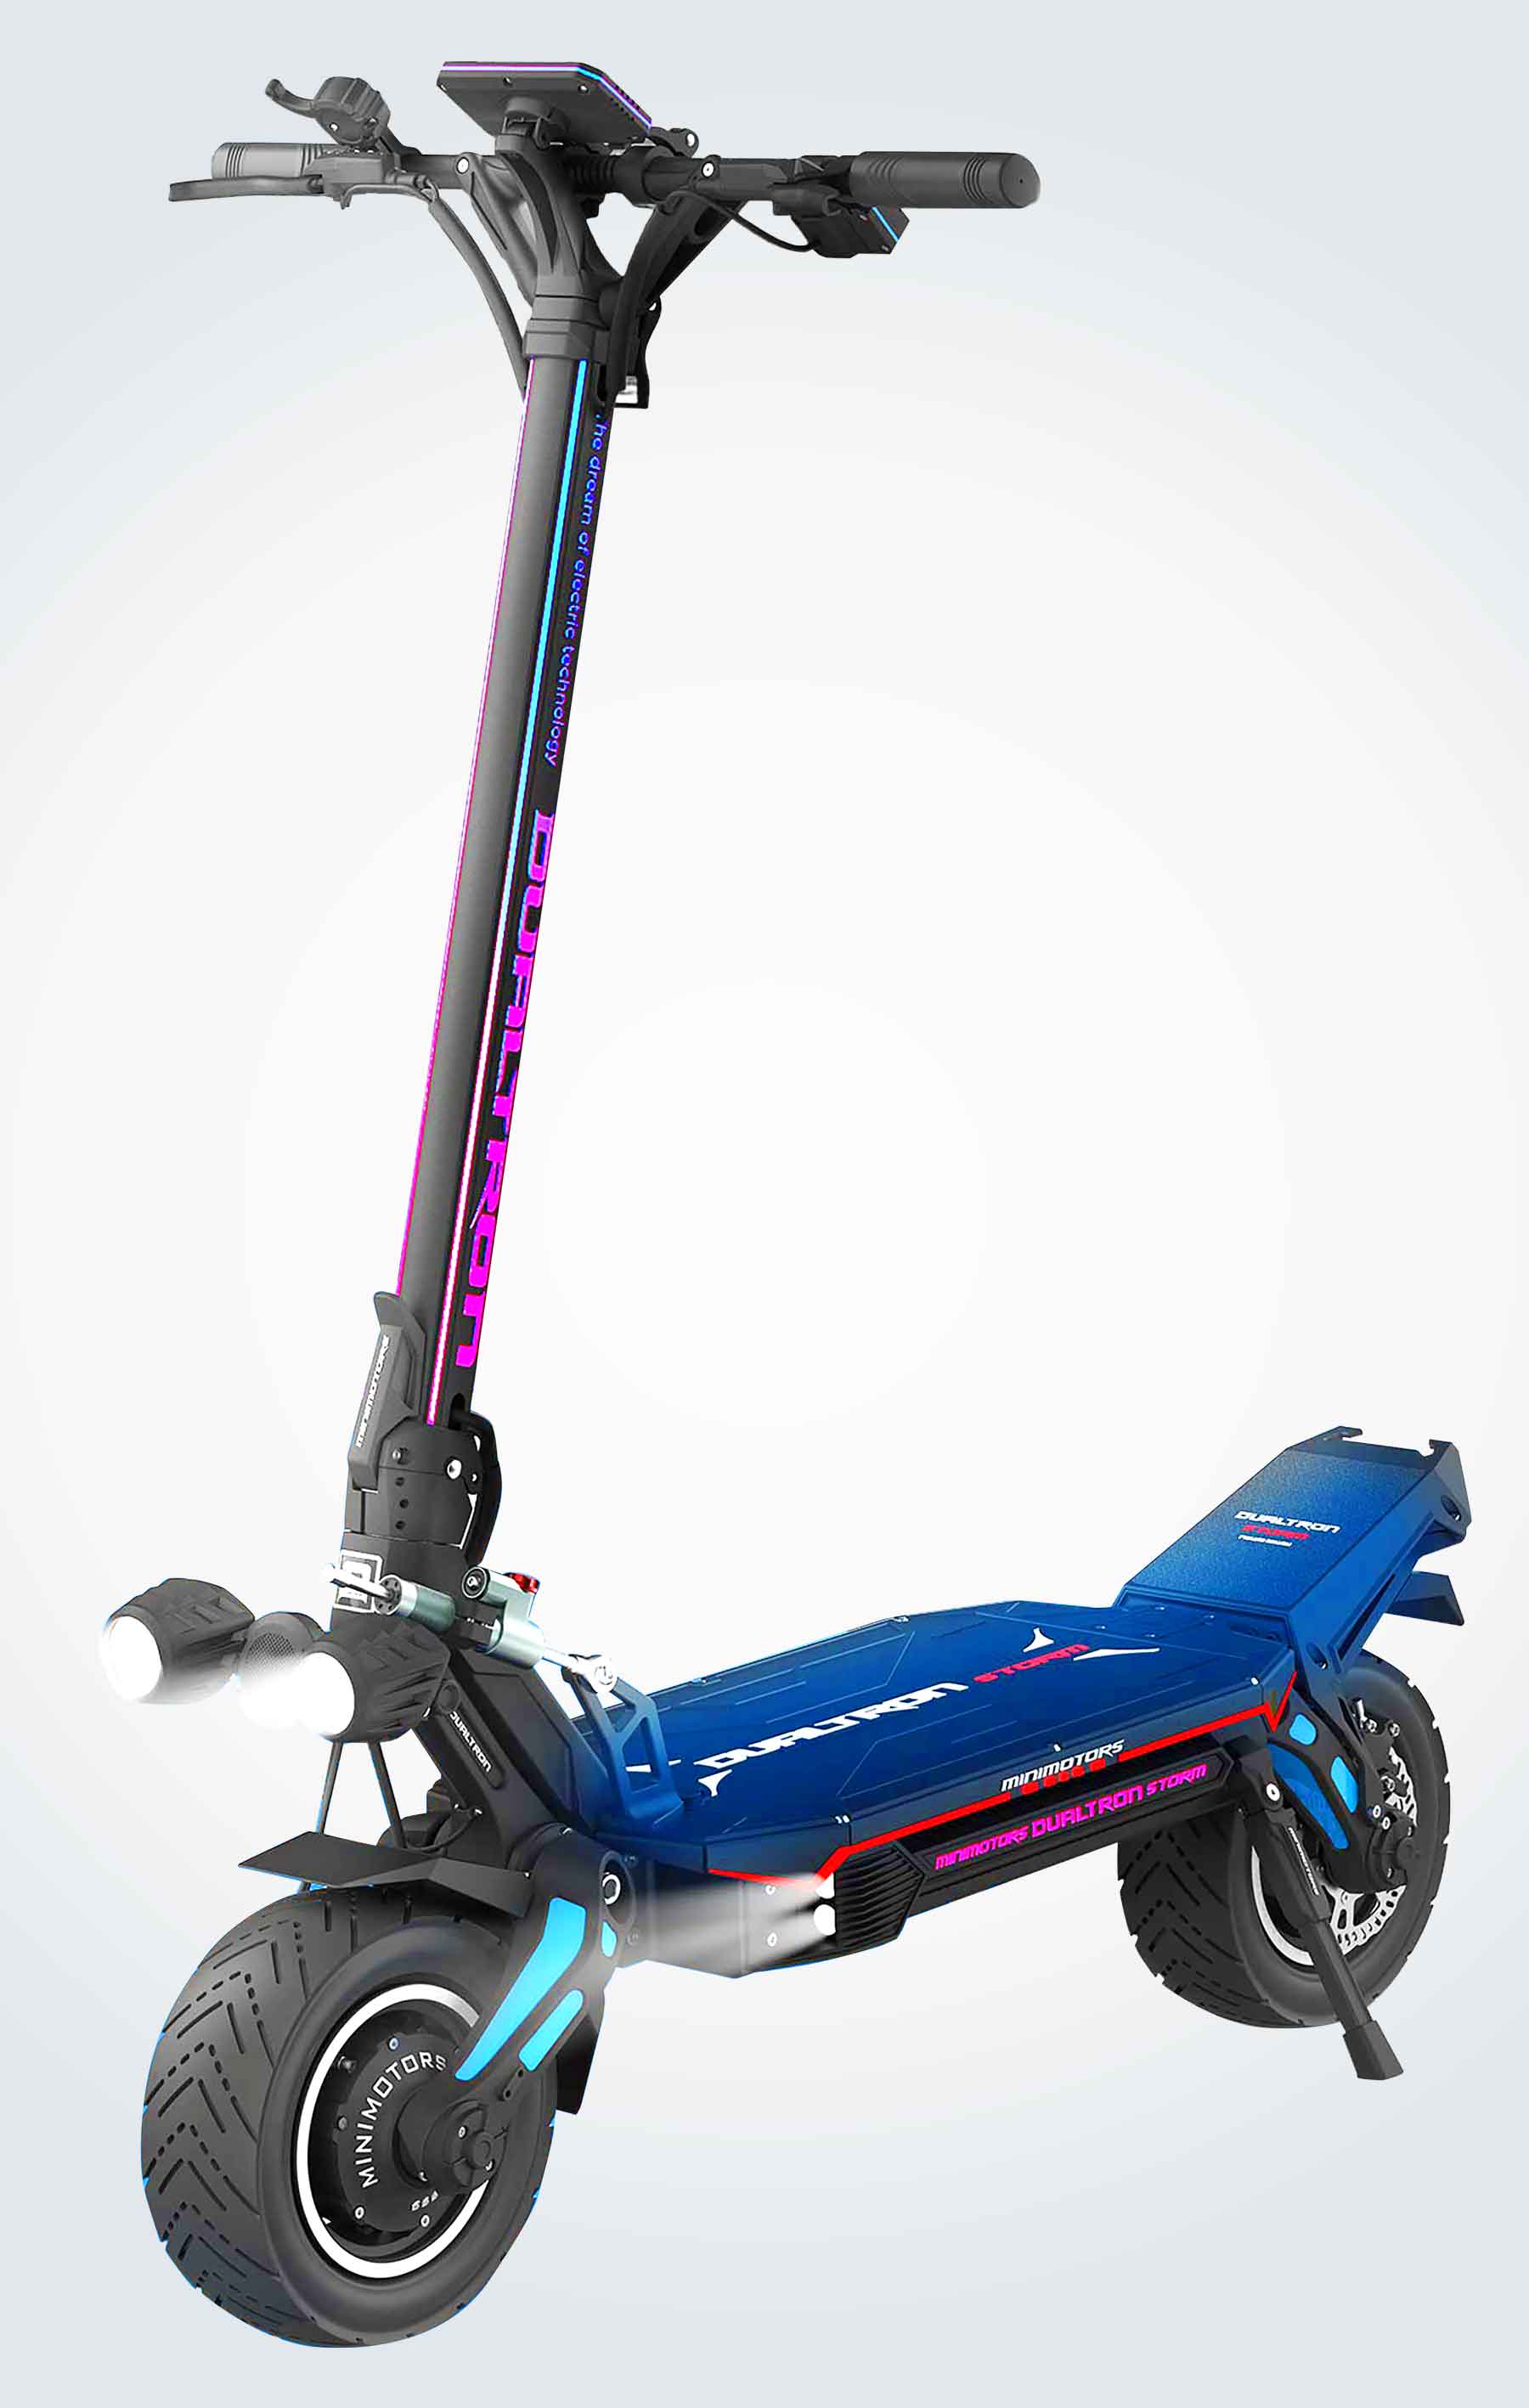 Dualtron Storm Limited Electric Scooter. - VORO MOTORS